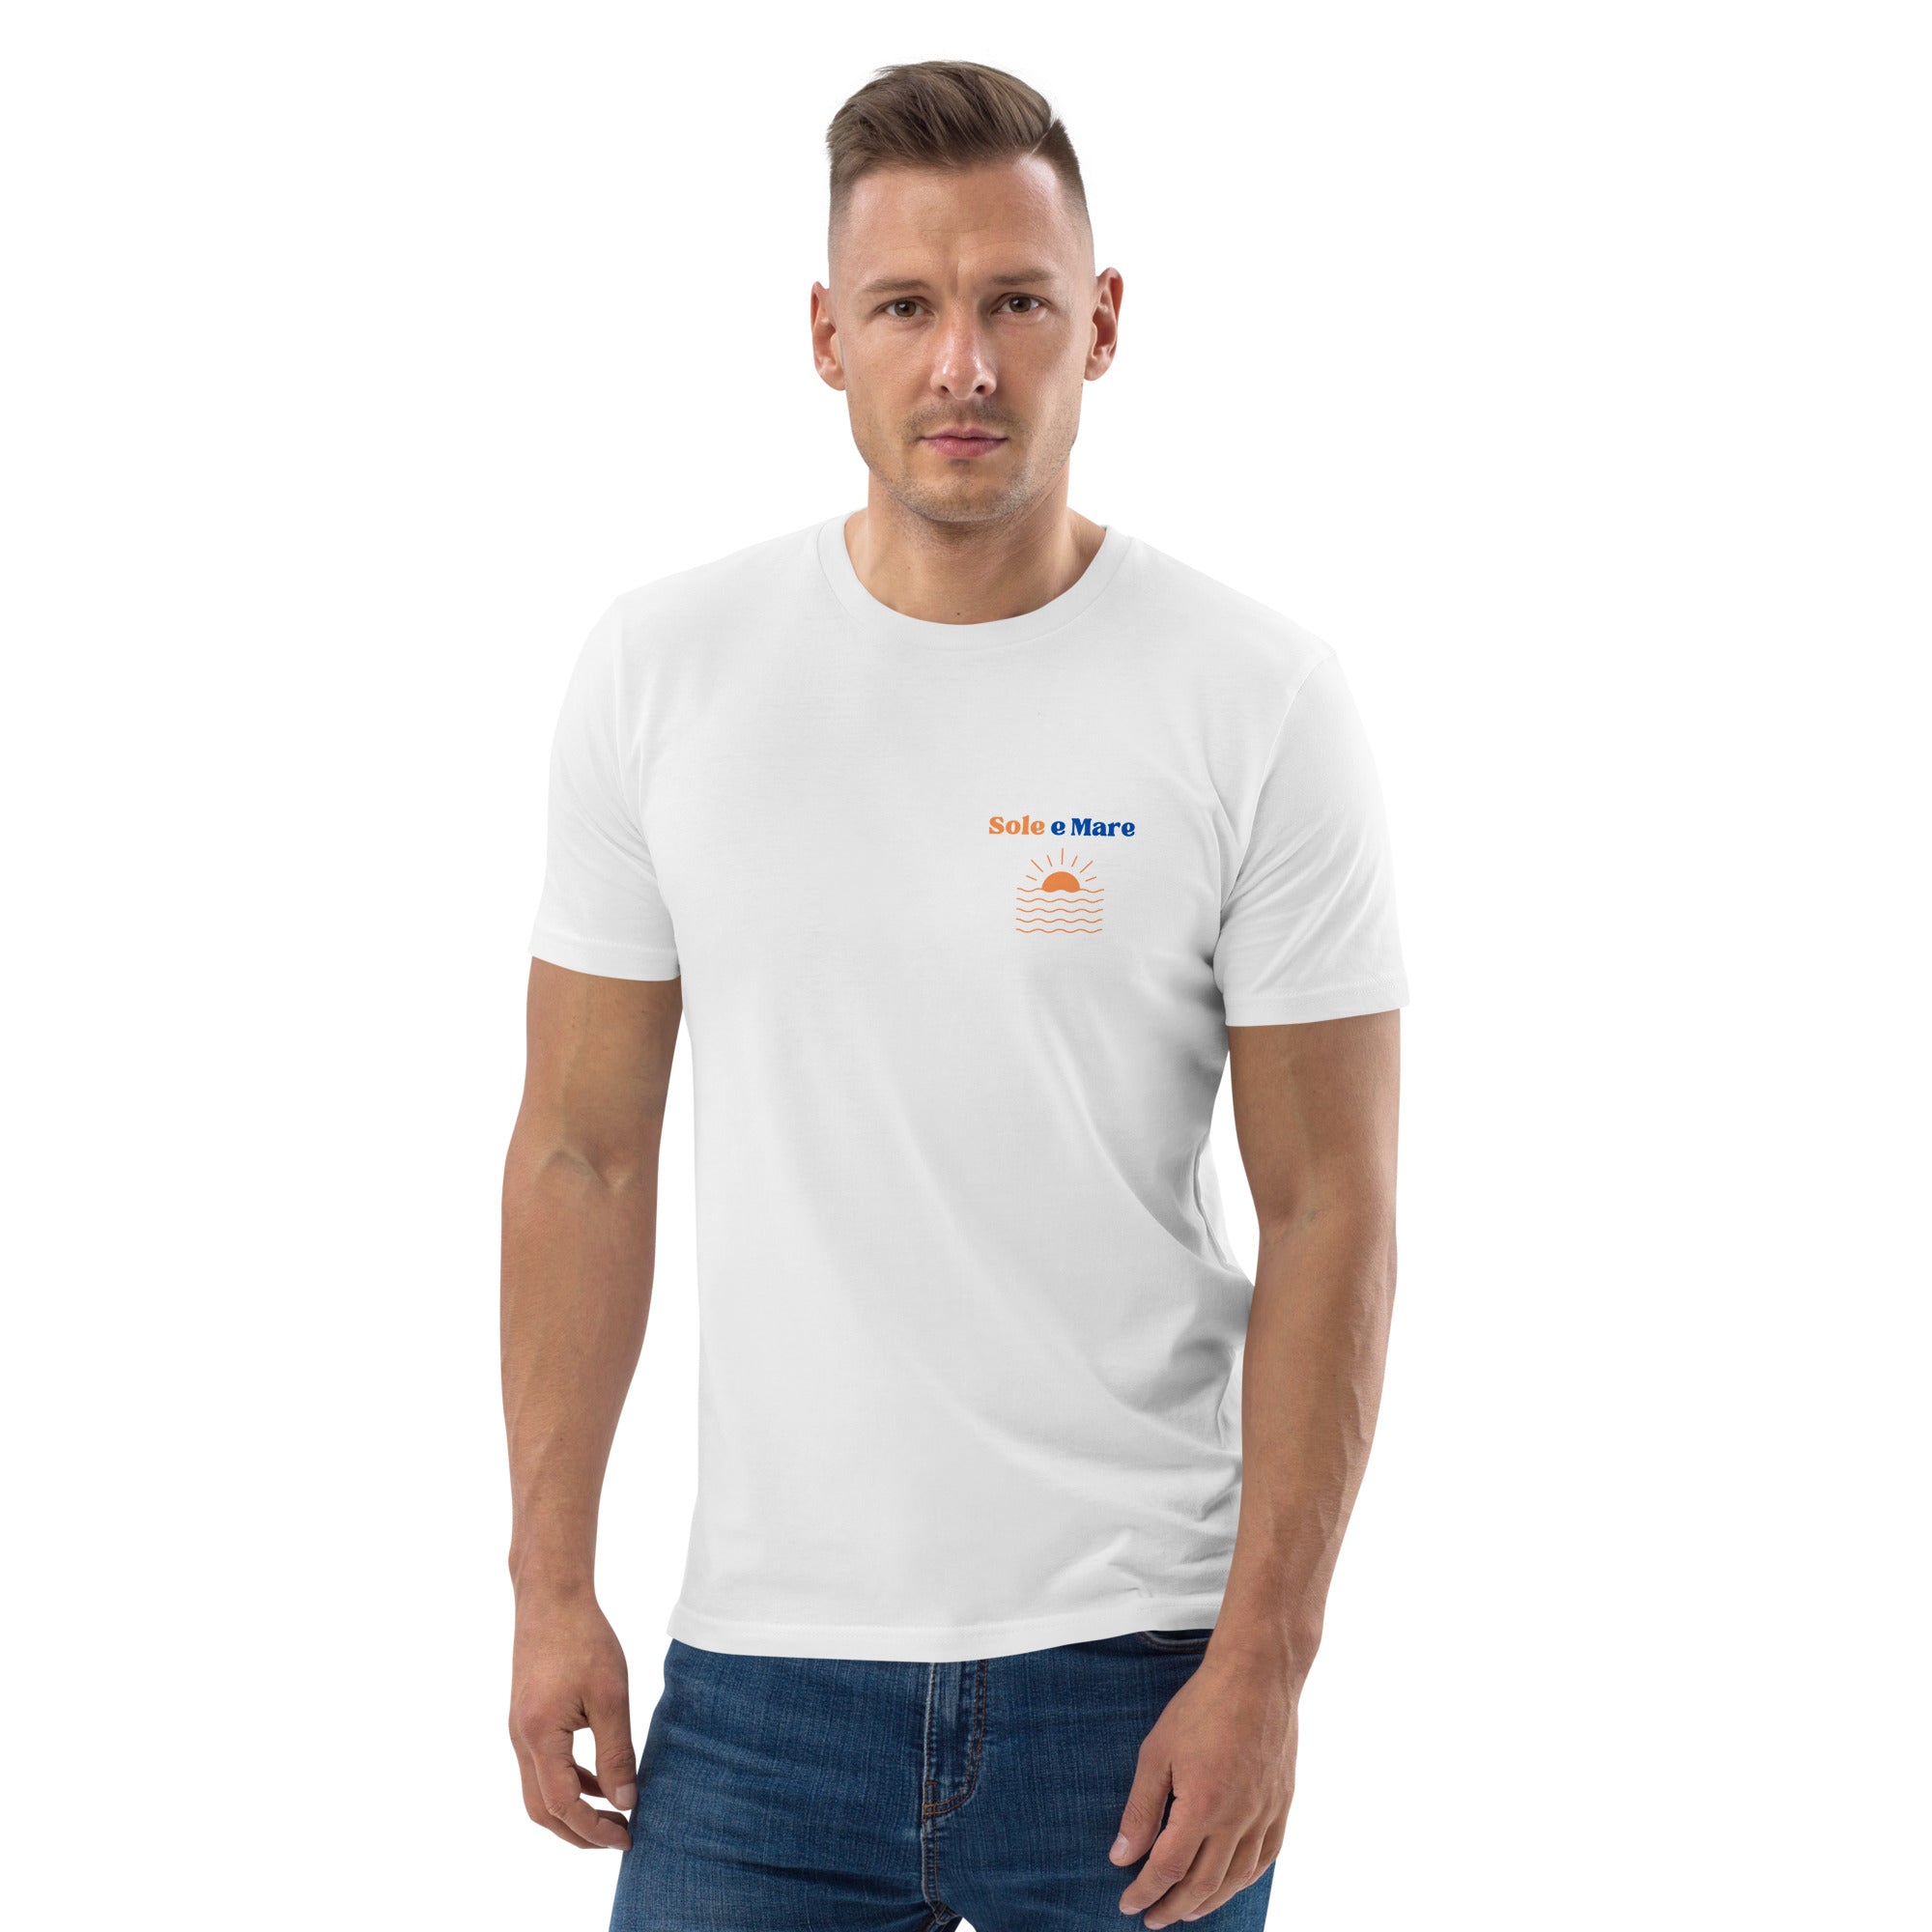 CLUB SOLE e MARE: Unisex-Bio-Baumwoll-T-Shirt